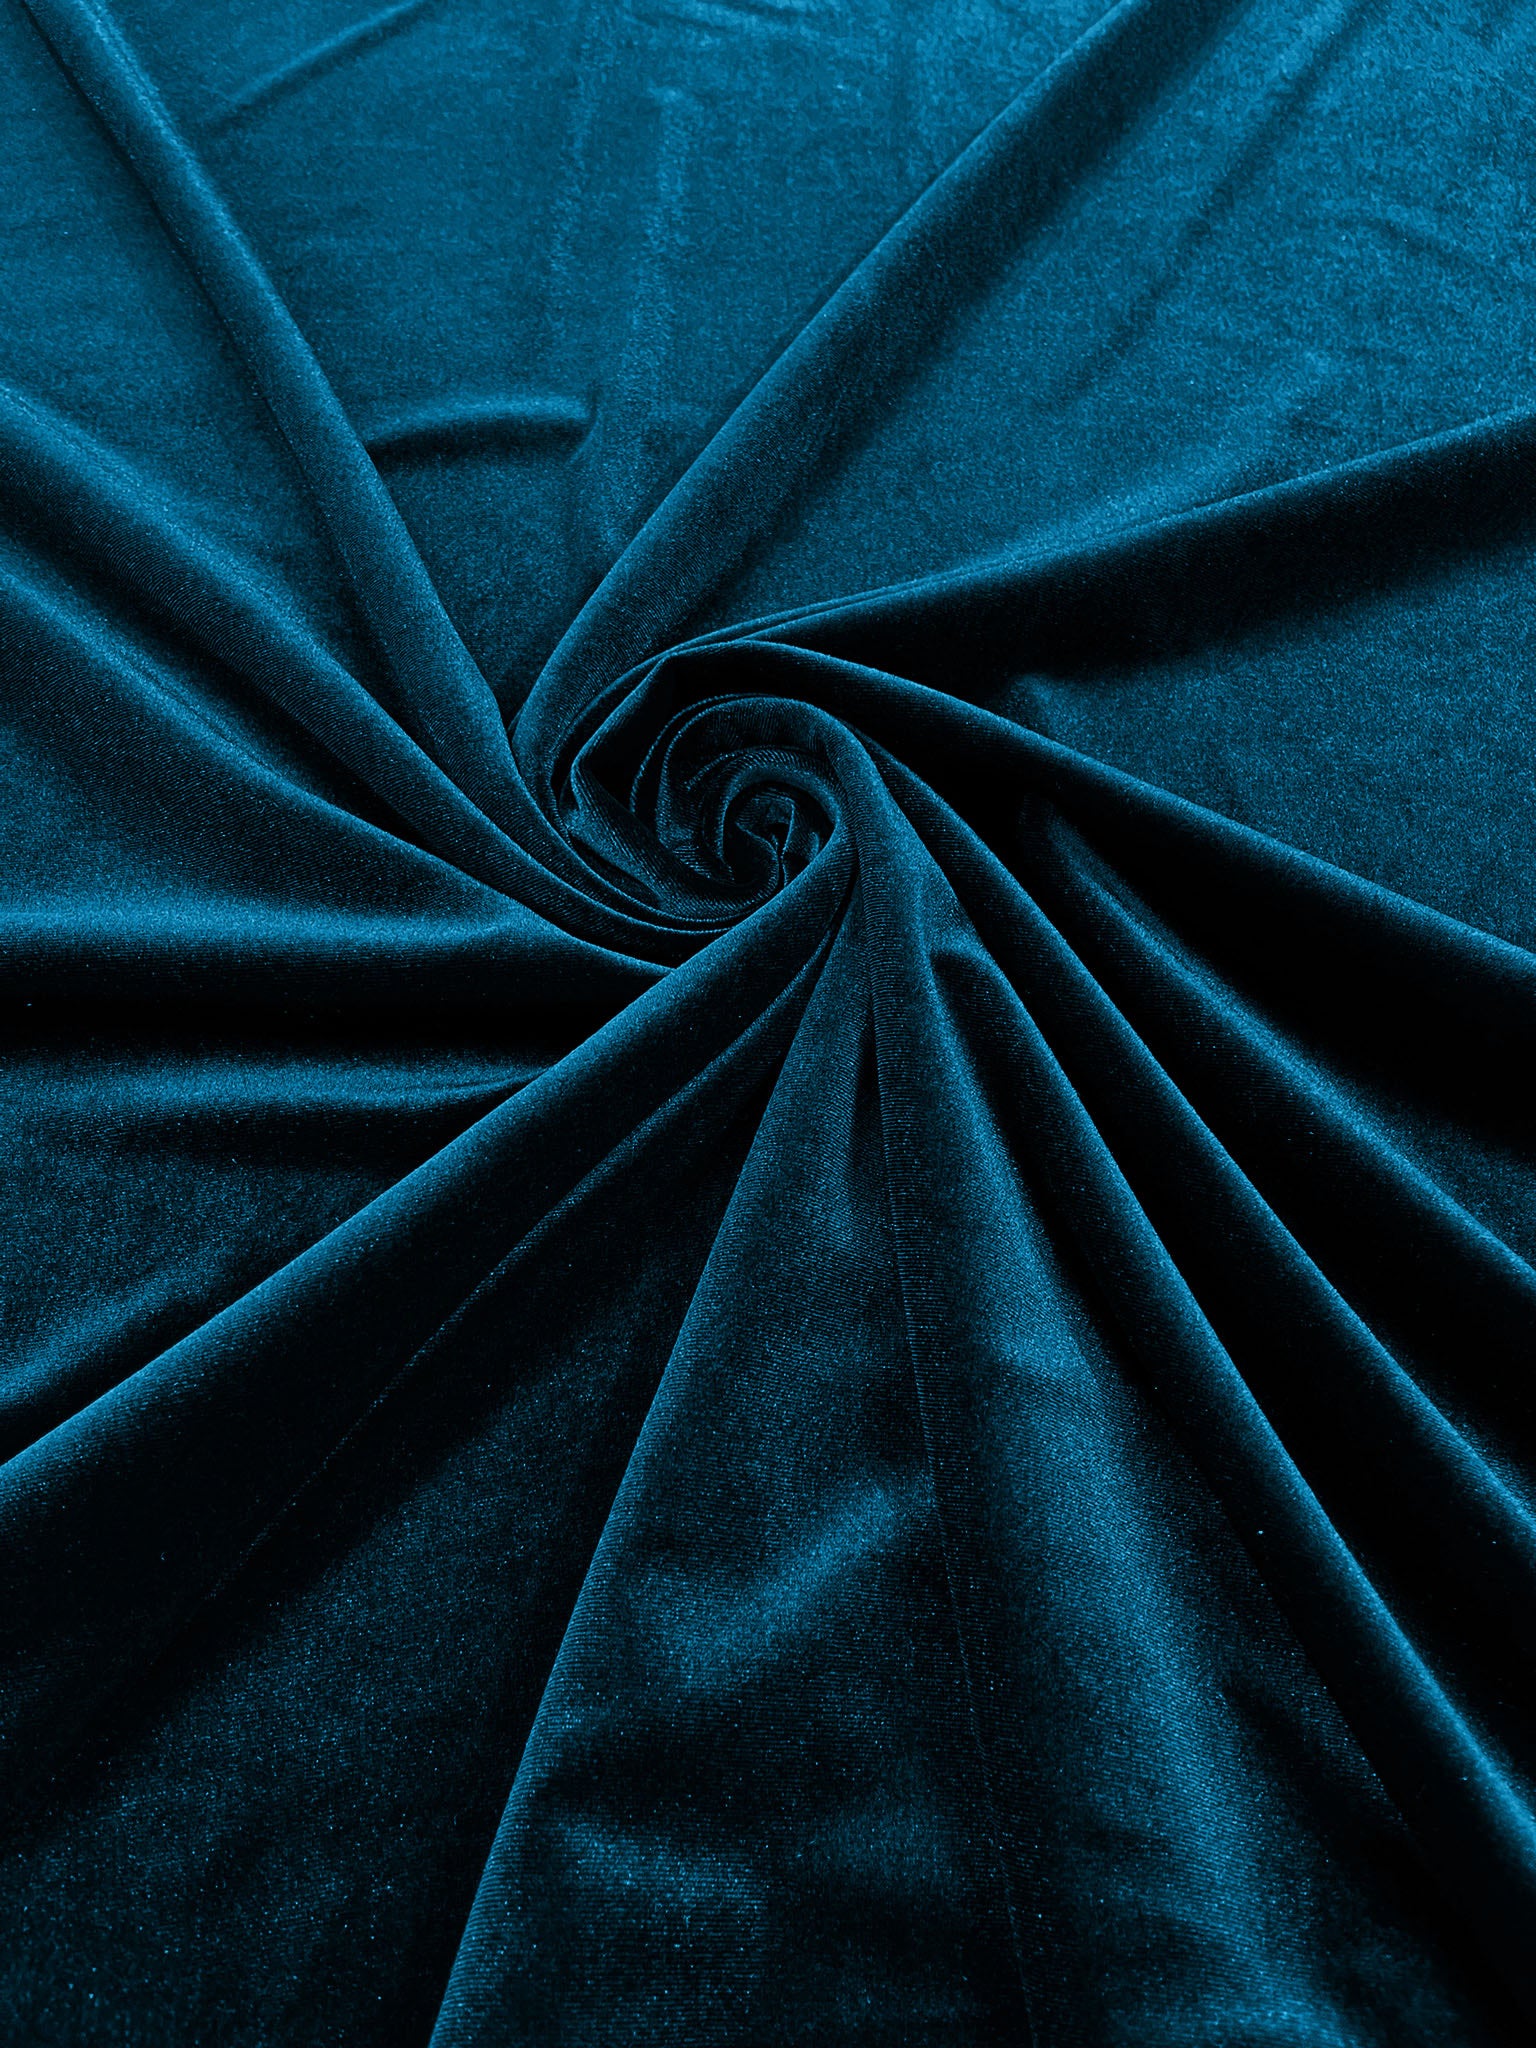 Teal Blue Stretch Velvet Polyester Spandex 60" Wide | Plush Velvet For Christmas, Apparel, Cosplay, Curtains, Decoration, Costume